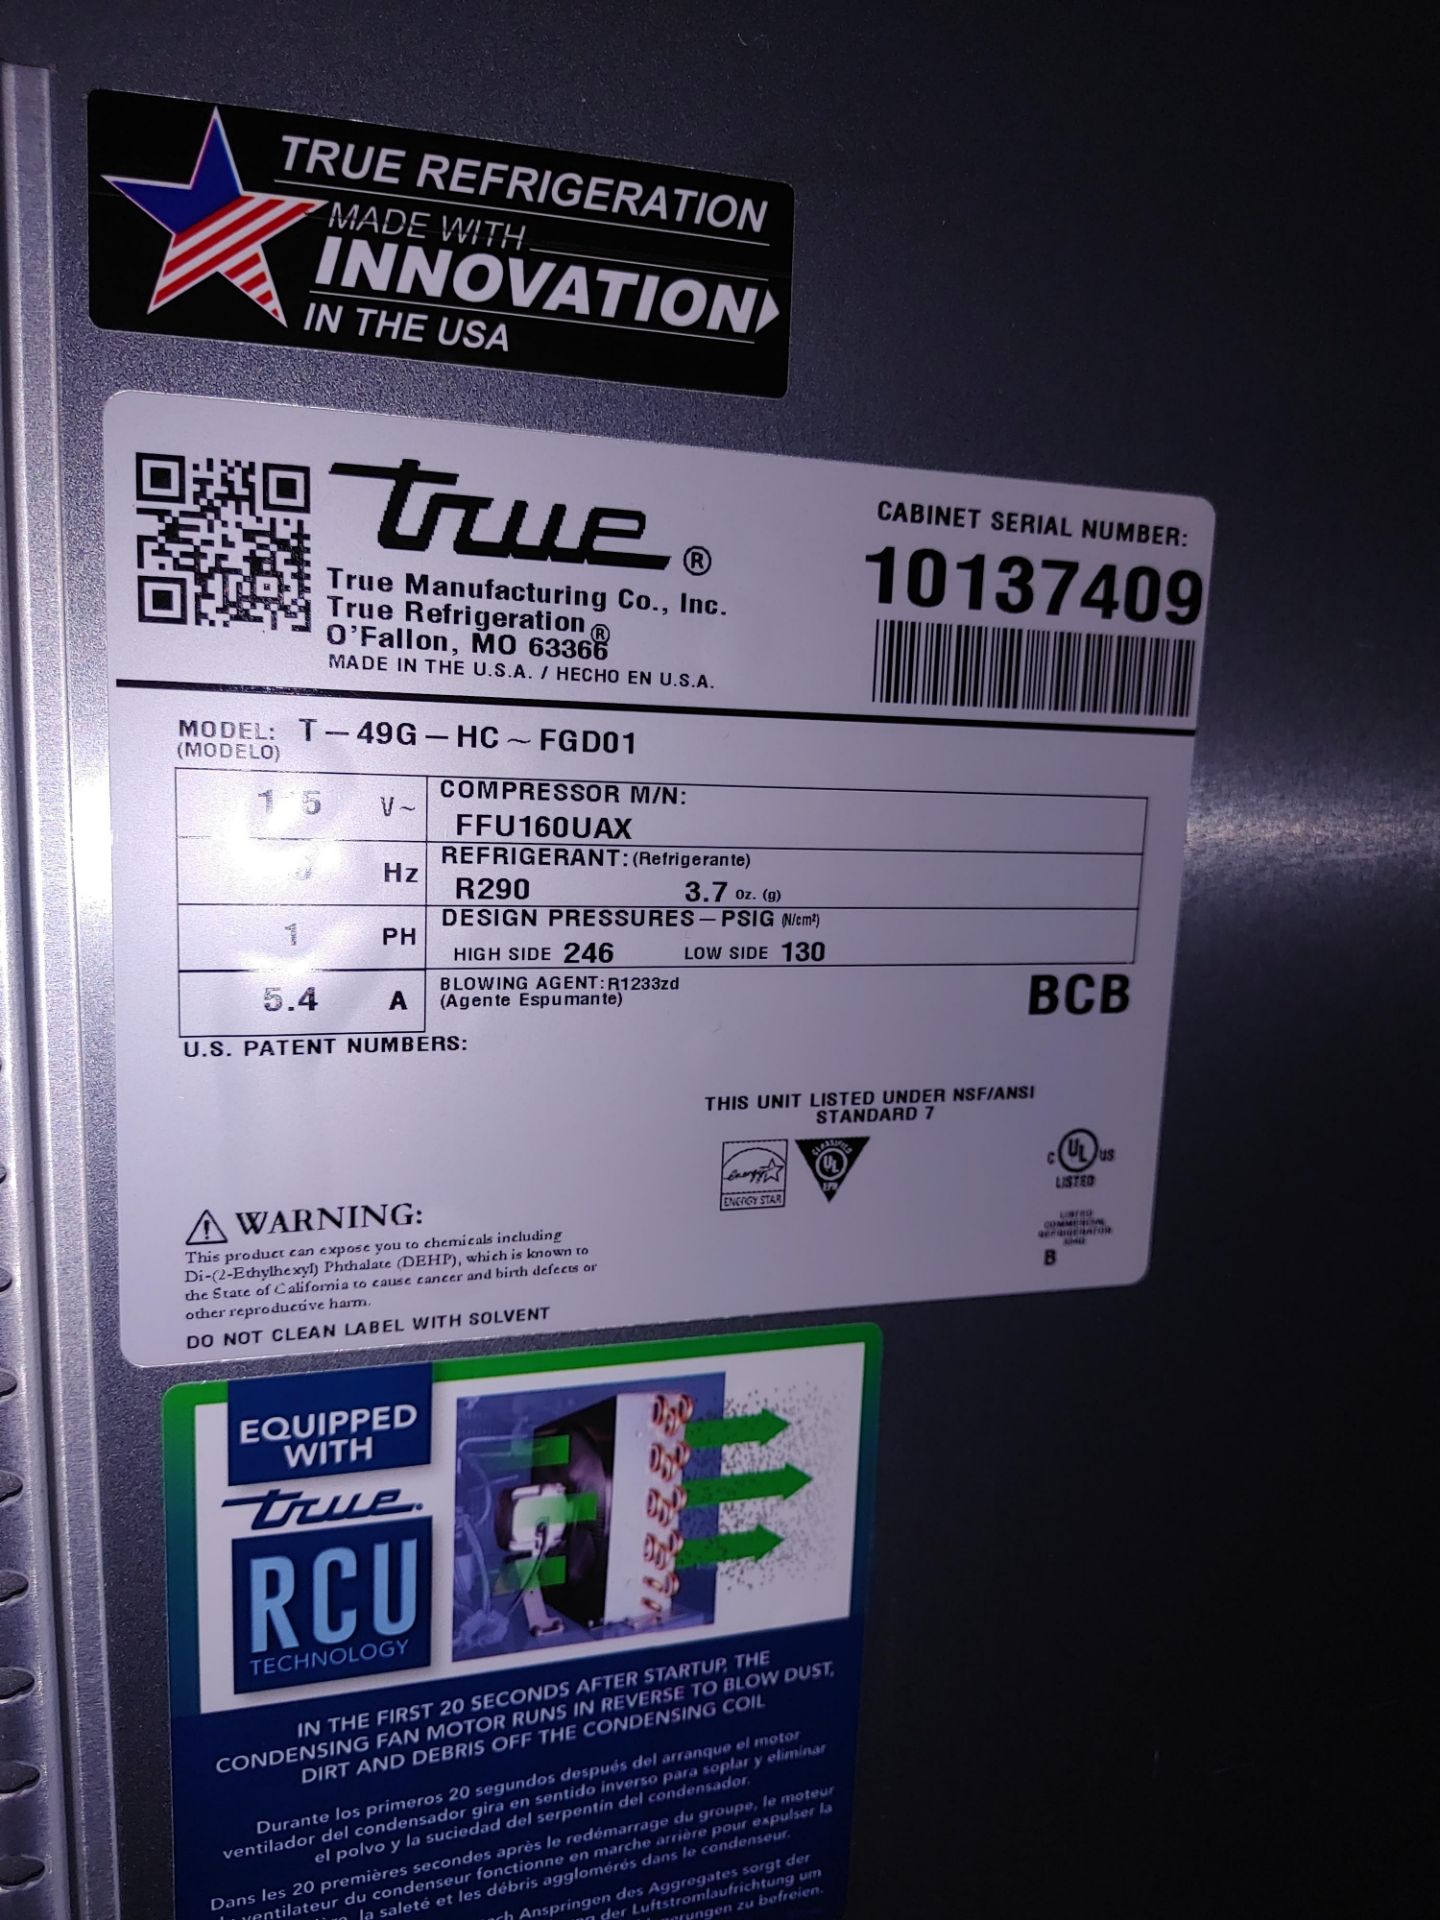 True "T-49G-HC-FGD01" 2 Door Glass Front Refrigerator S/N 10137409 - Image 2 of 2